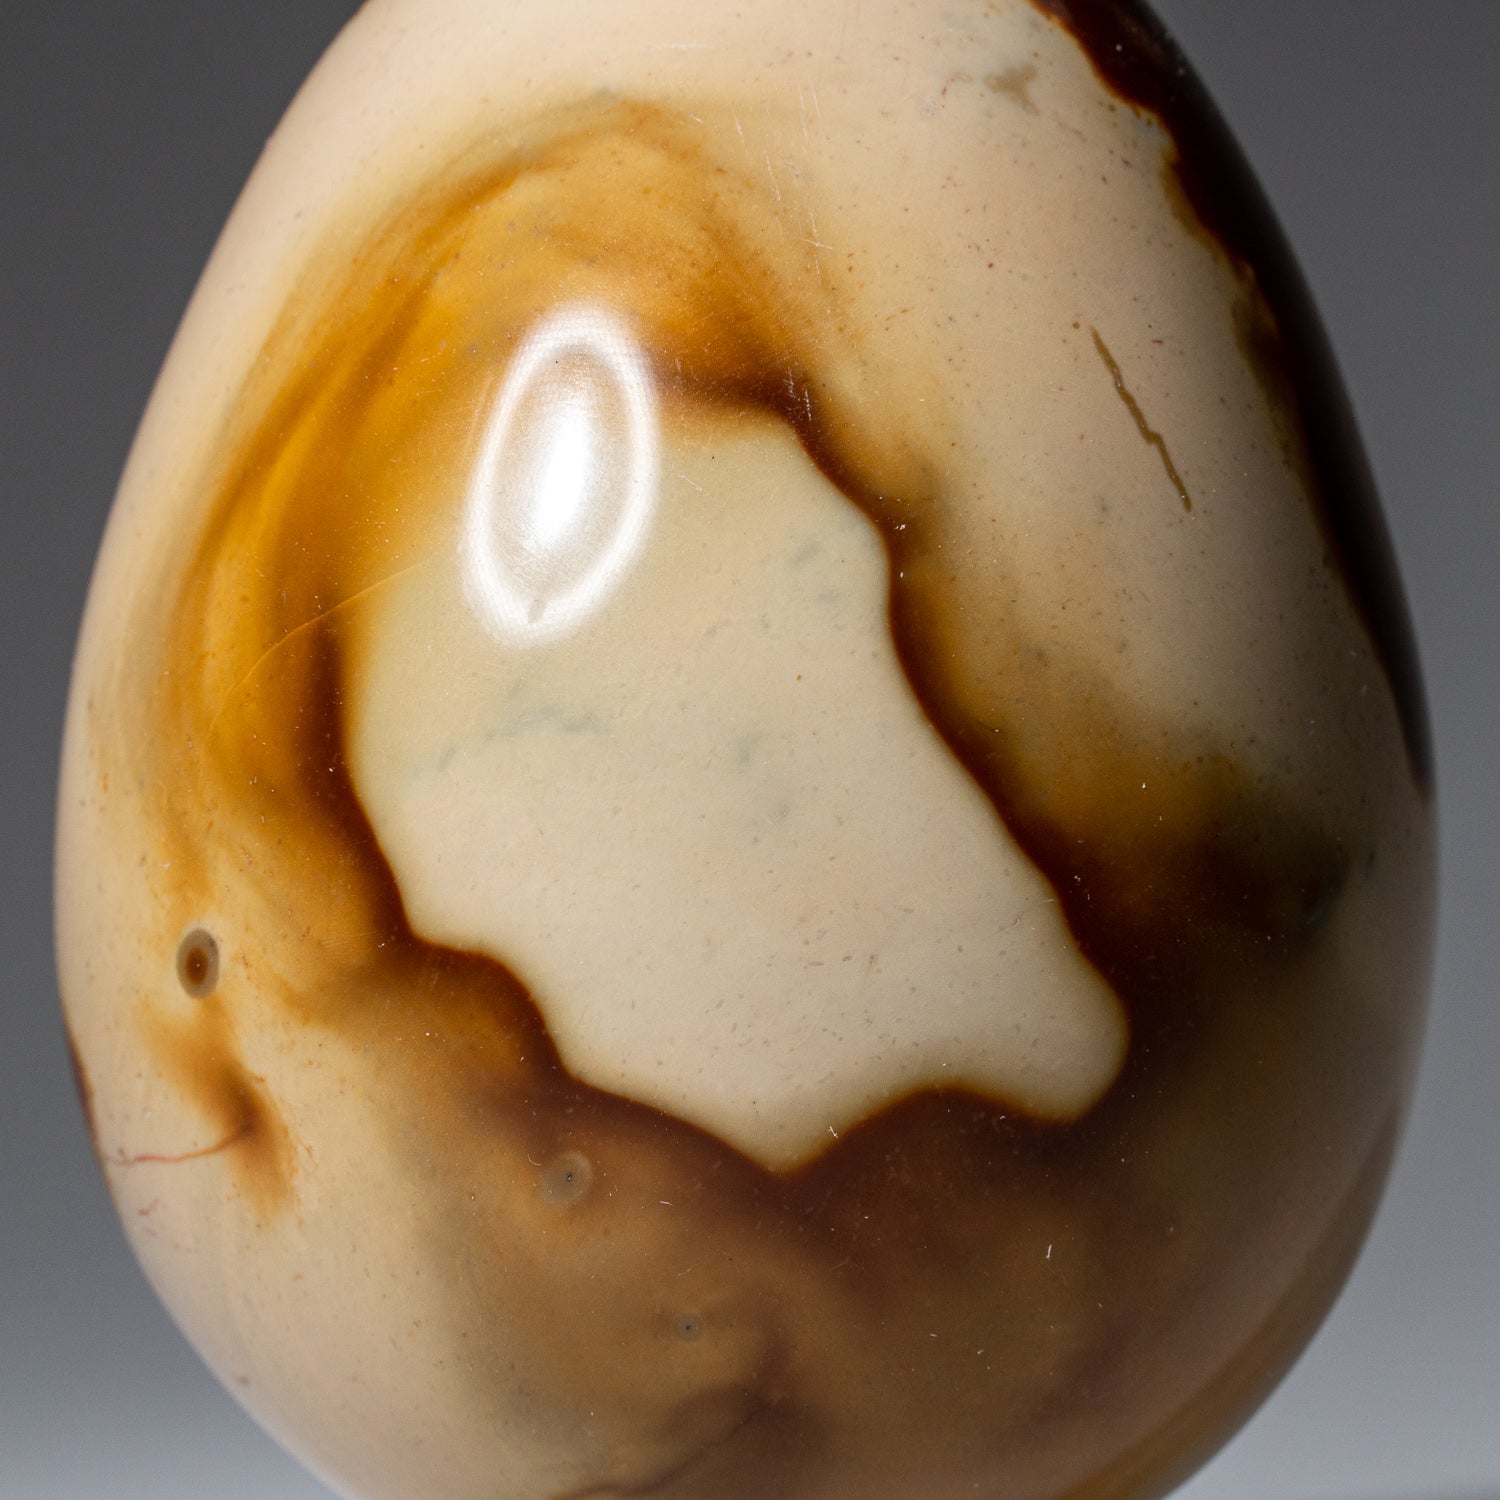 Genuine Polished Polychrome Egg from Madagascar (383.6 grams)